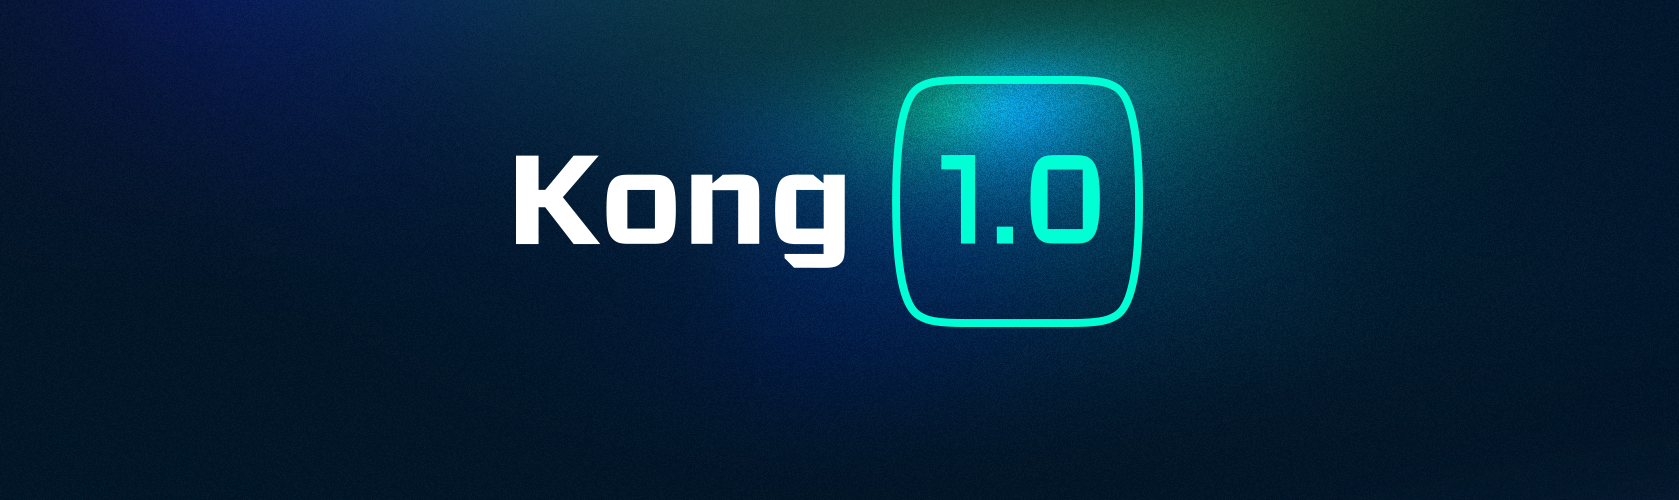 Announcing Kong 1.0